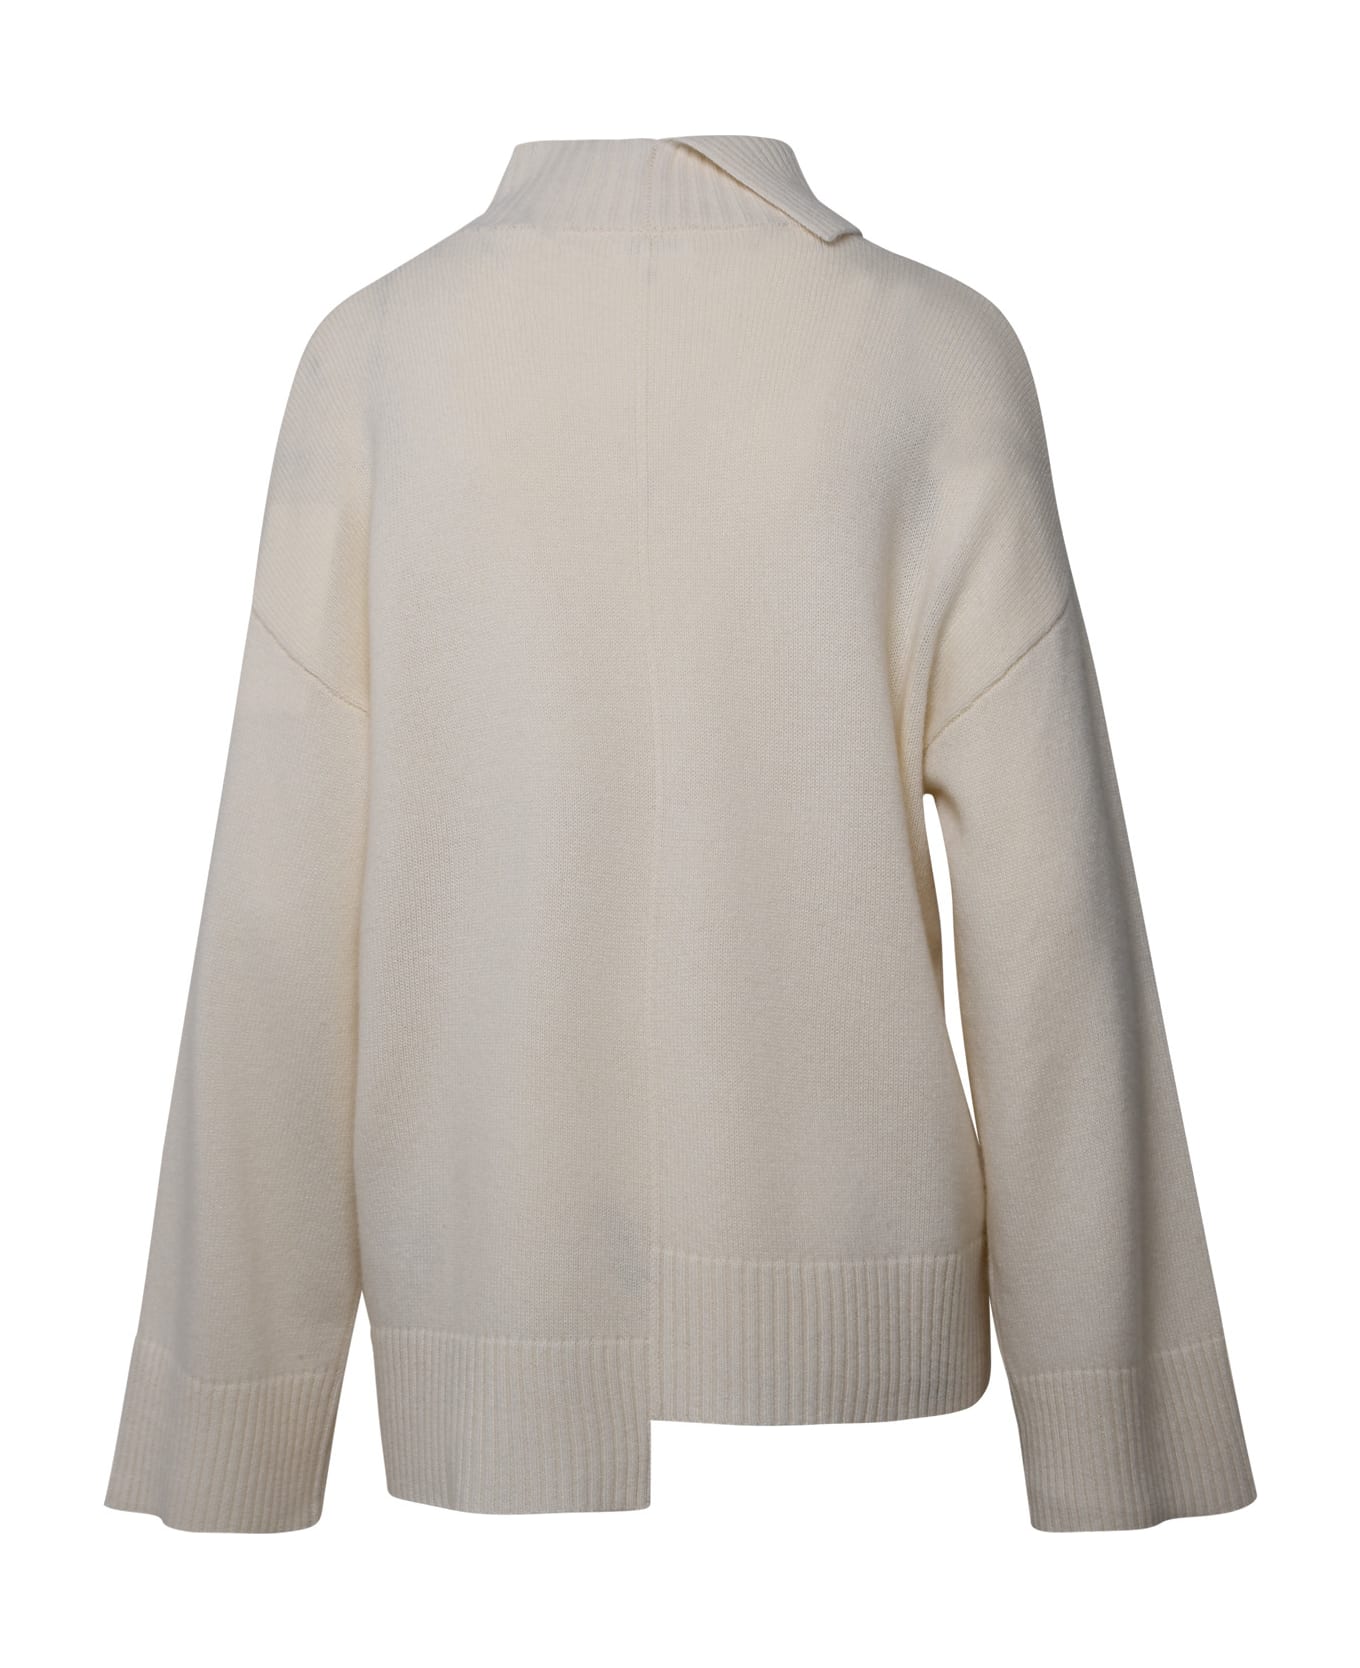 Parosh Cream Cashmere Blend Sweater - Cream ニットウェア